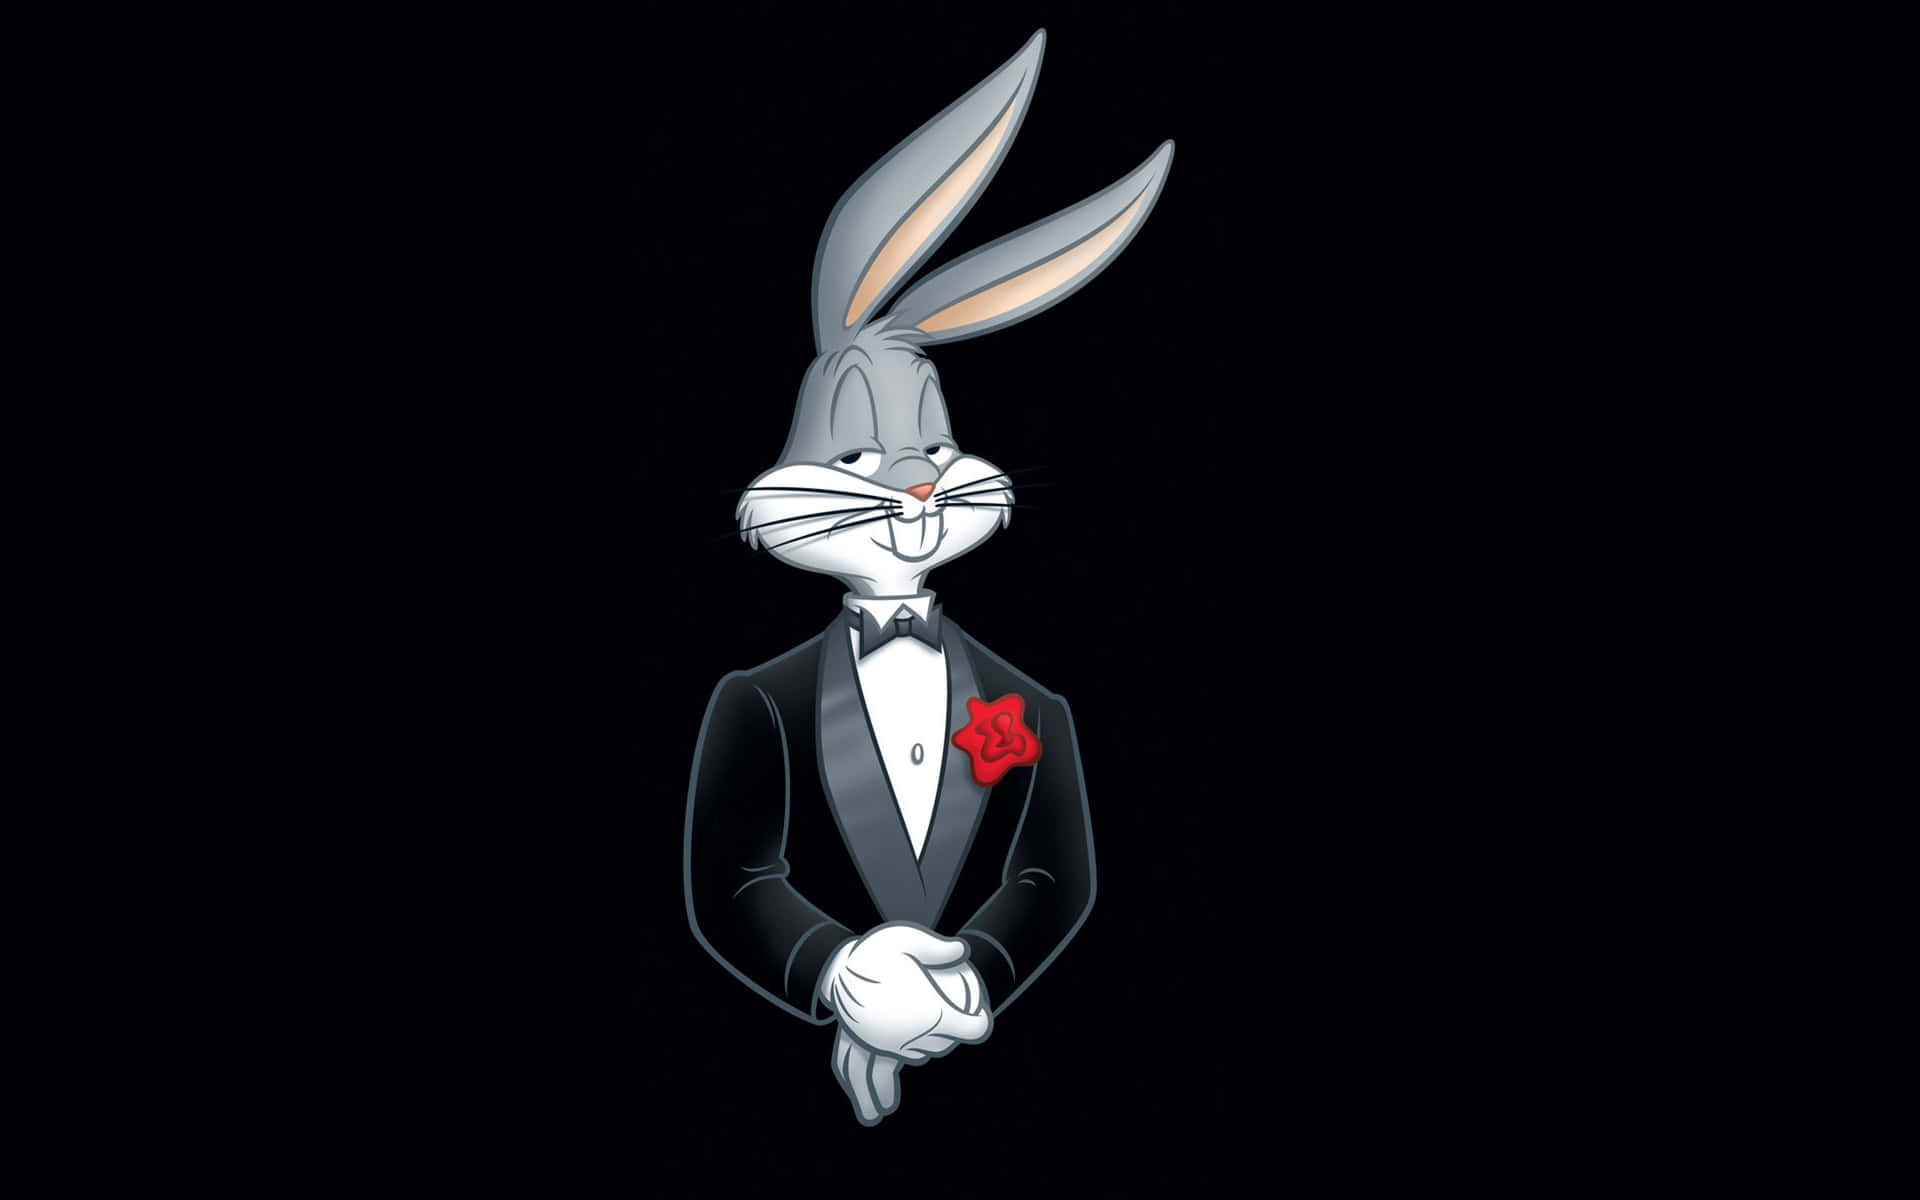 Cool Bugs Bunny In Tuxedo Wallpaper